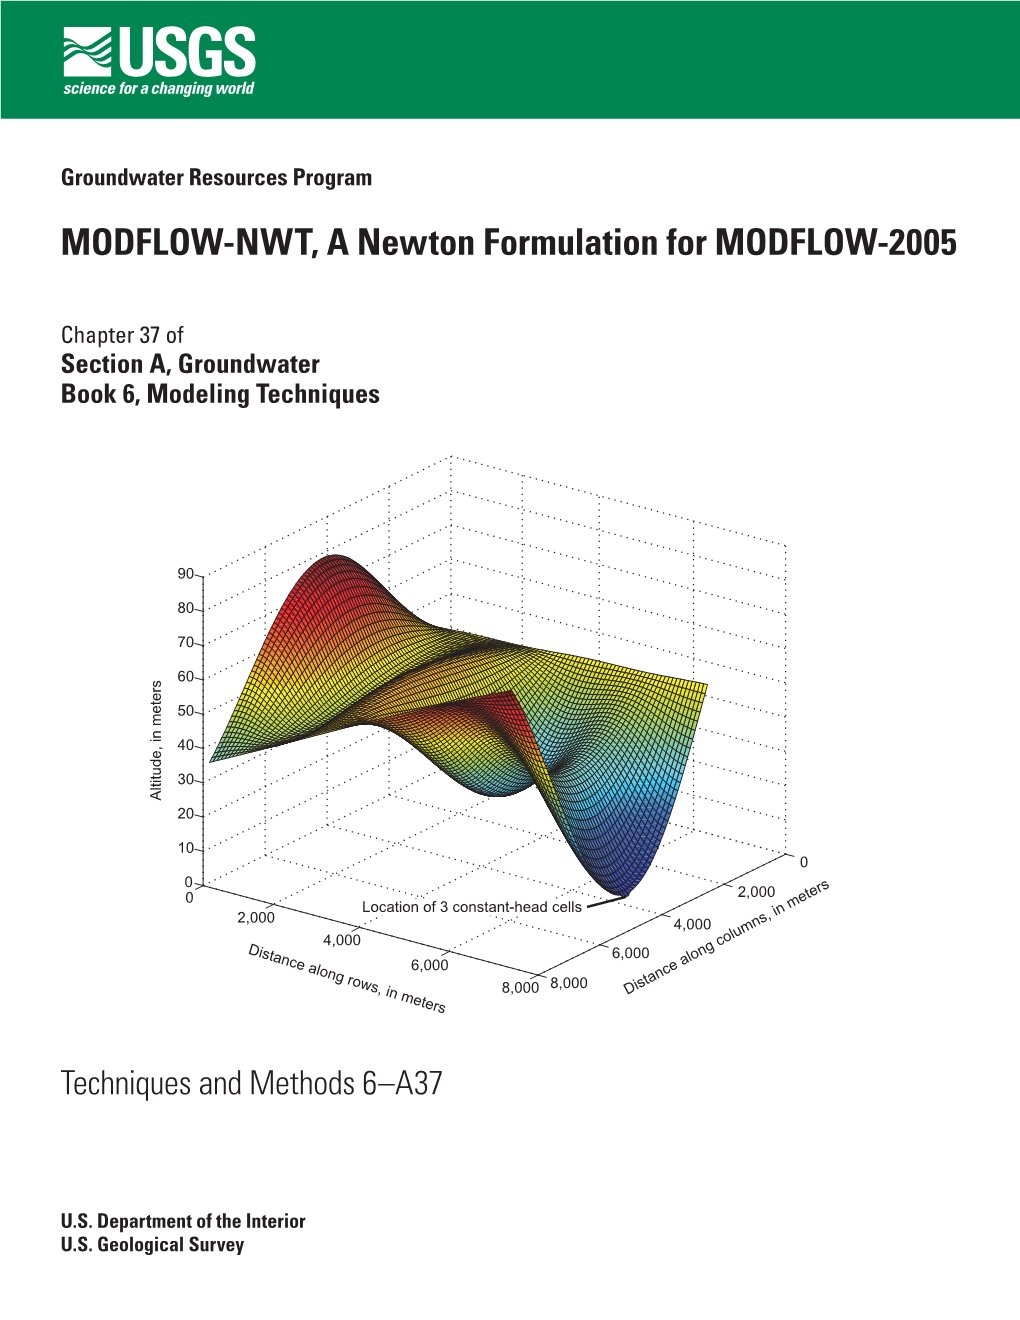 MODFLOW-NWT, a Newton Formulation for MODFLOW-2005